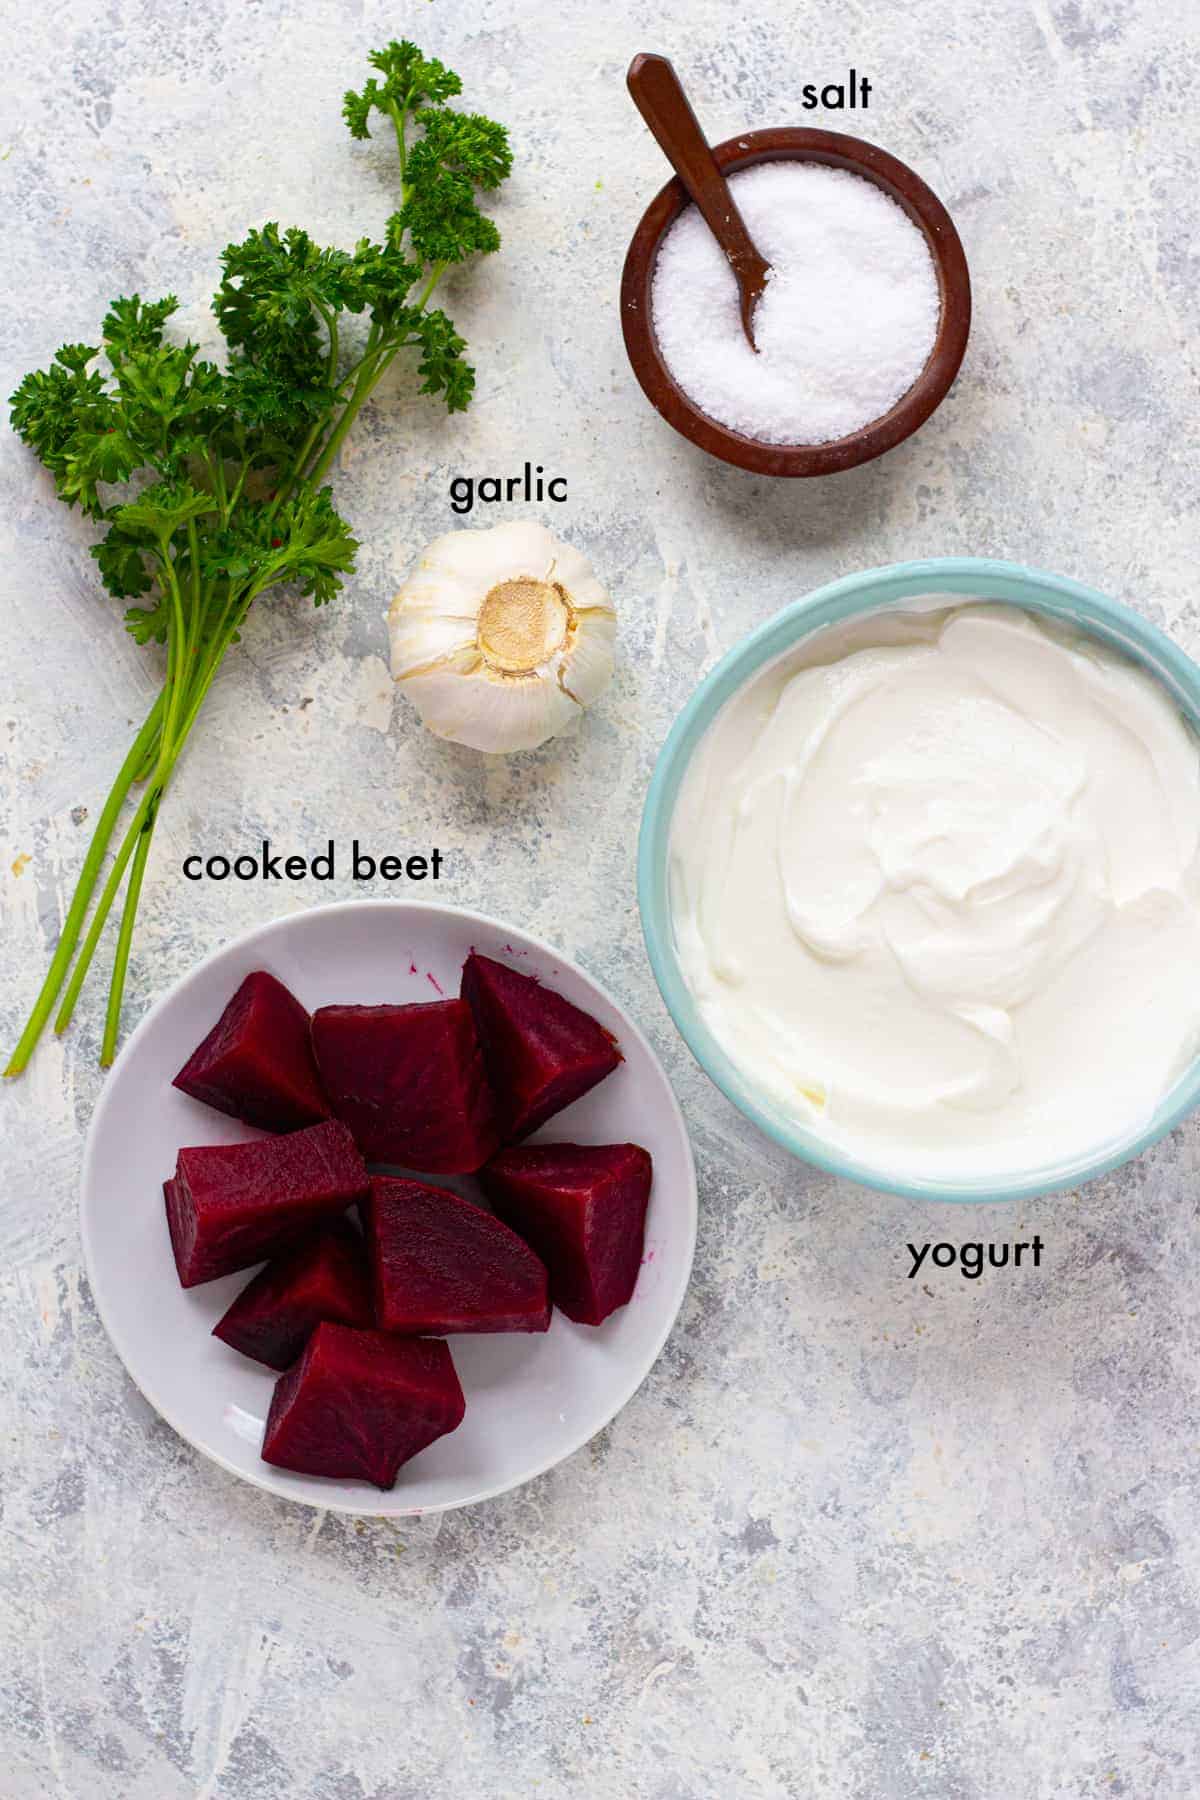 you need yogurt, beet and garlic for this recipe. 